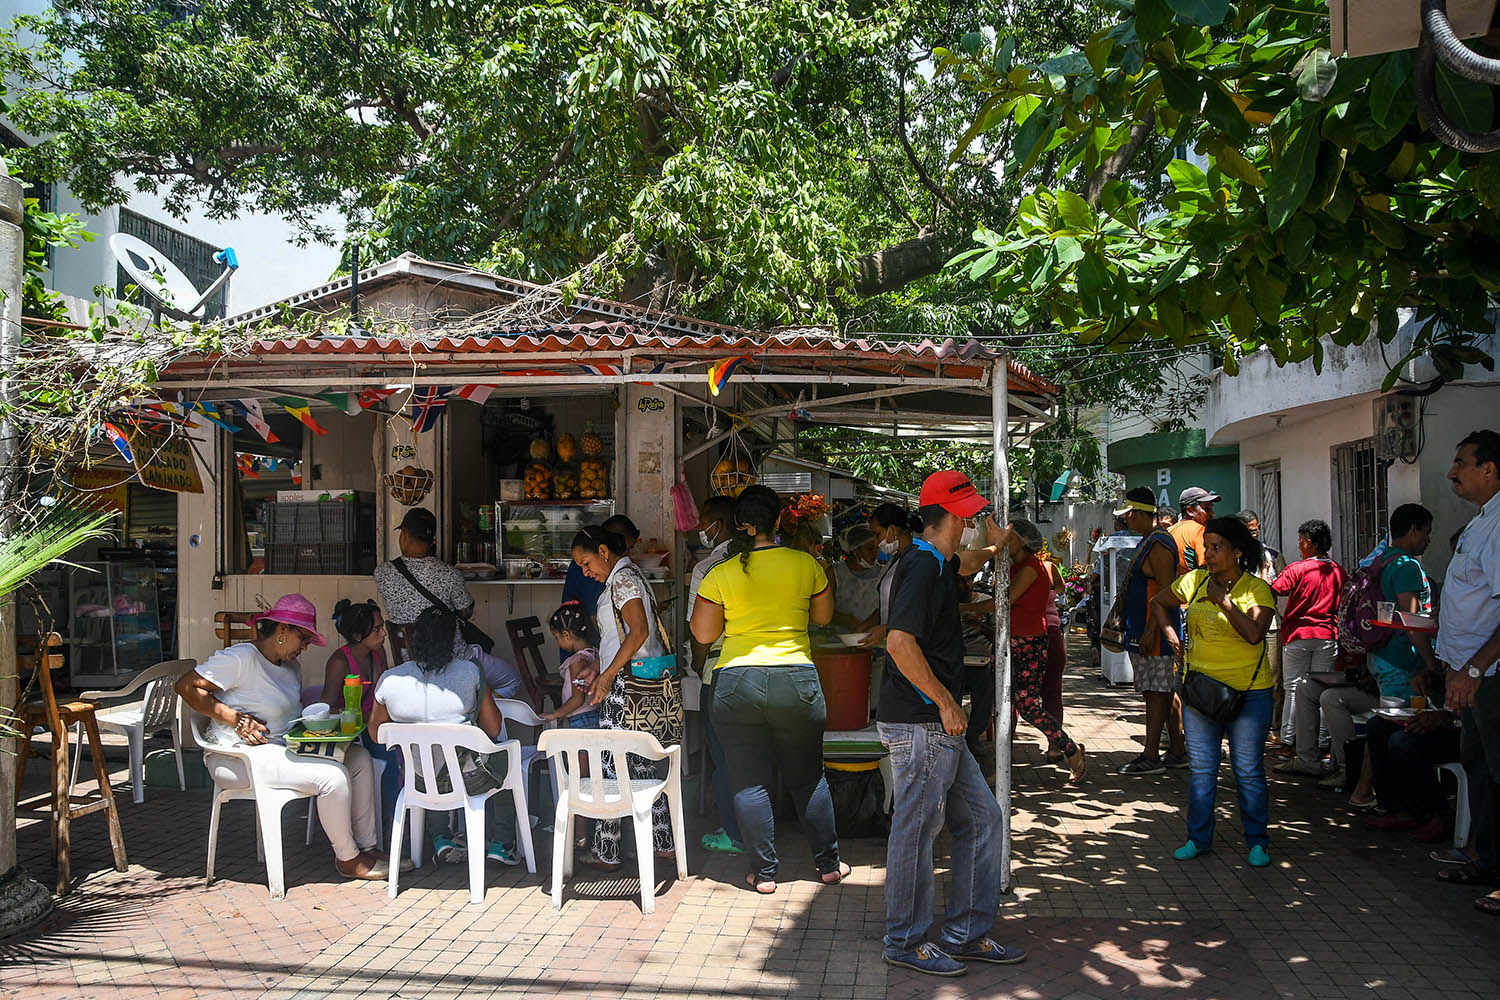 Things to do in Cartagena fresh juice